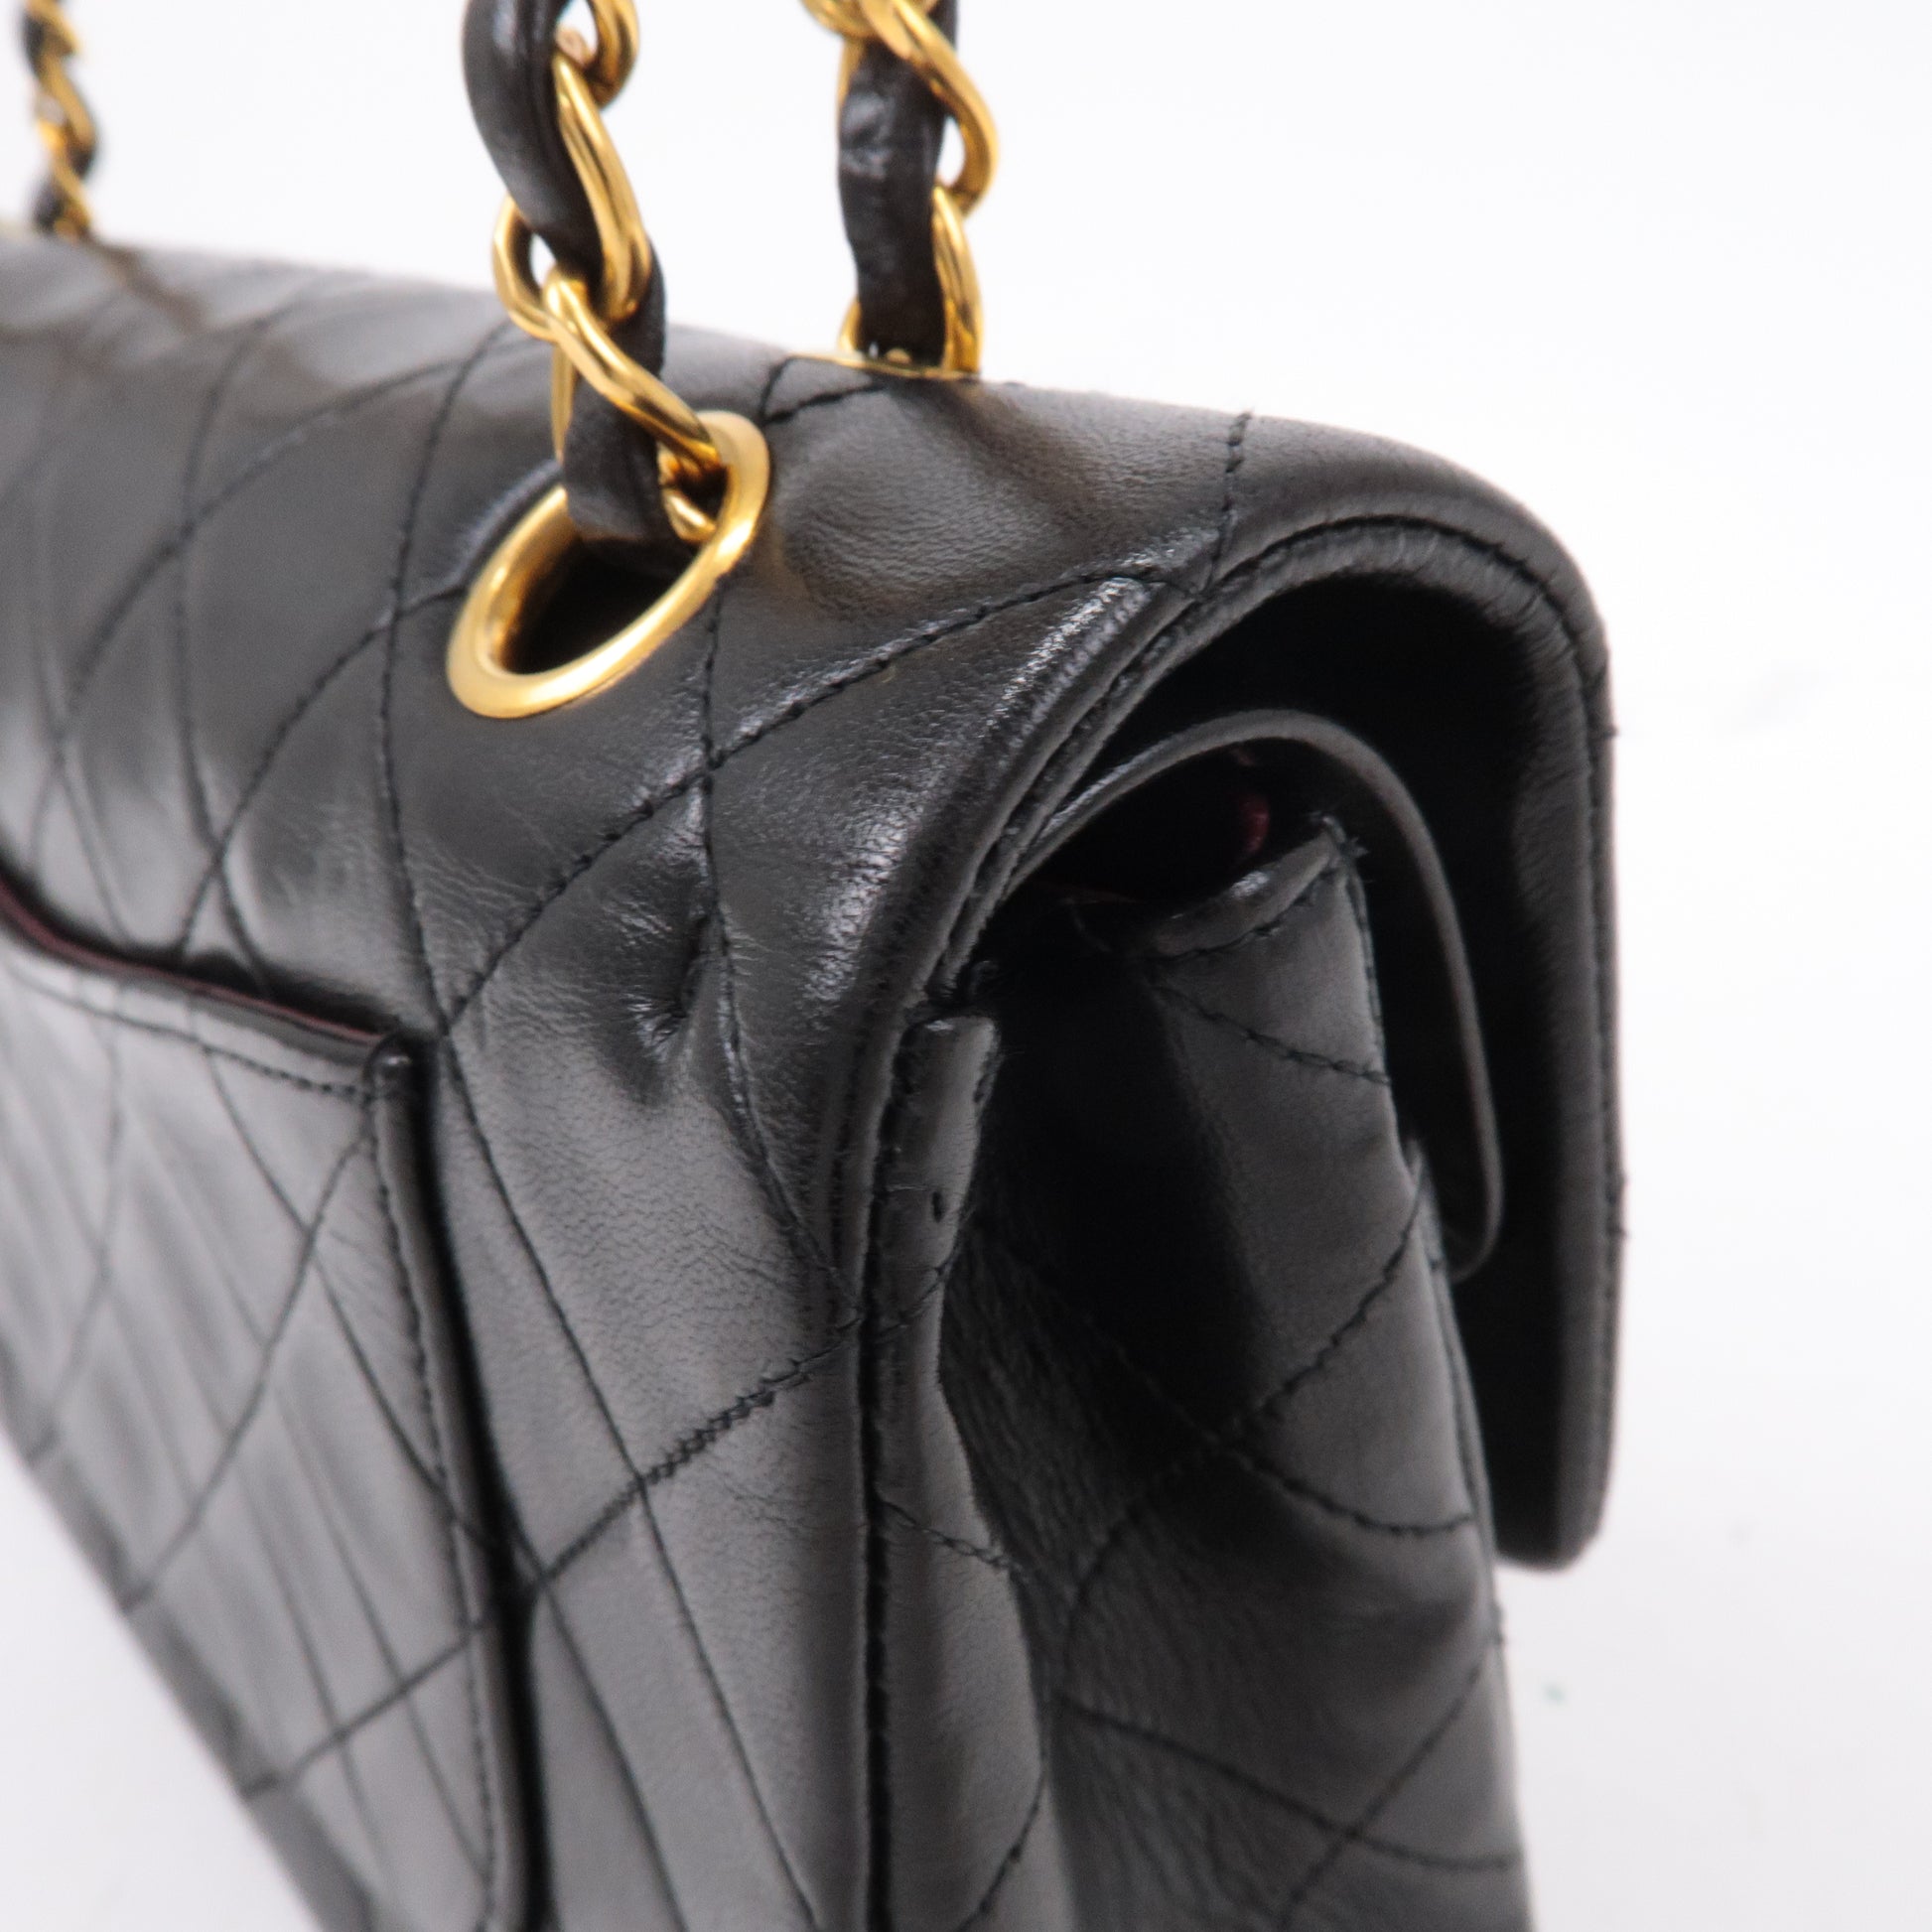 New! Chanel Cosmetic Bag - Gem